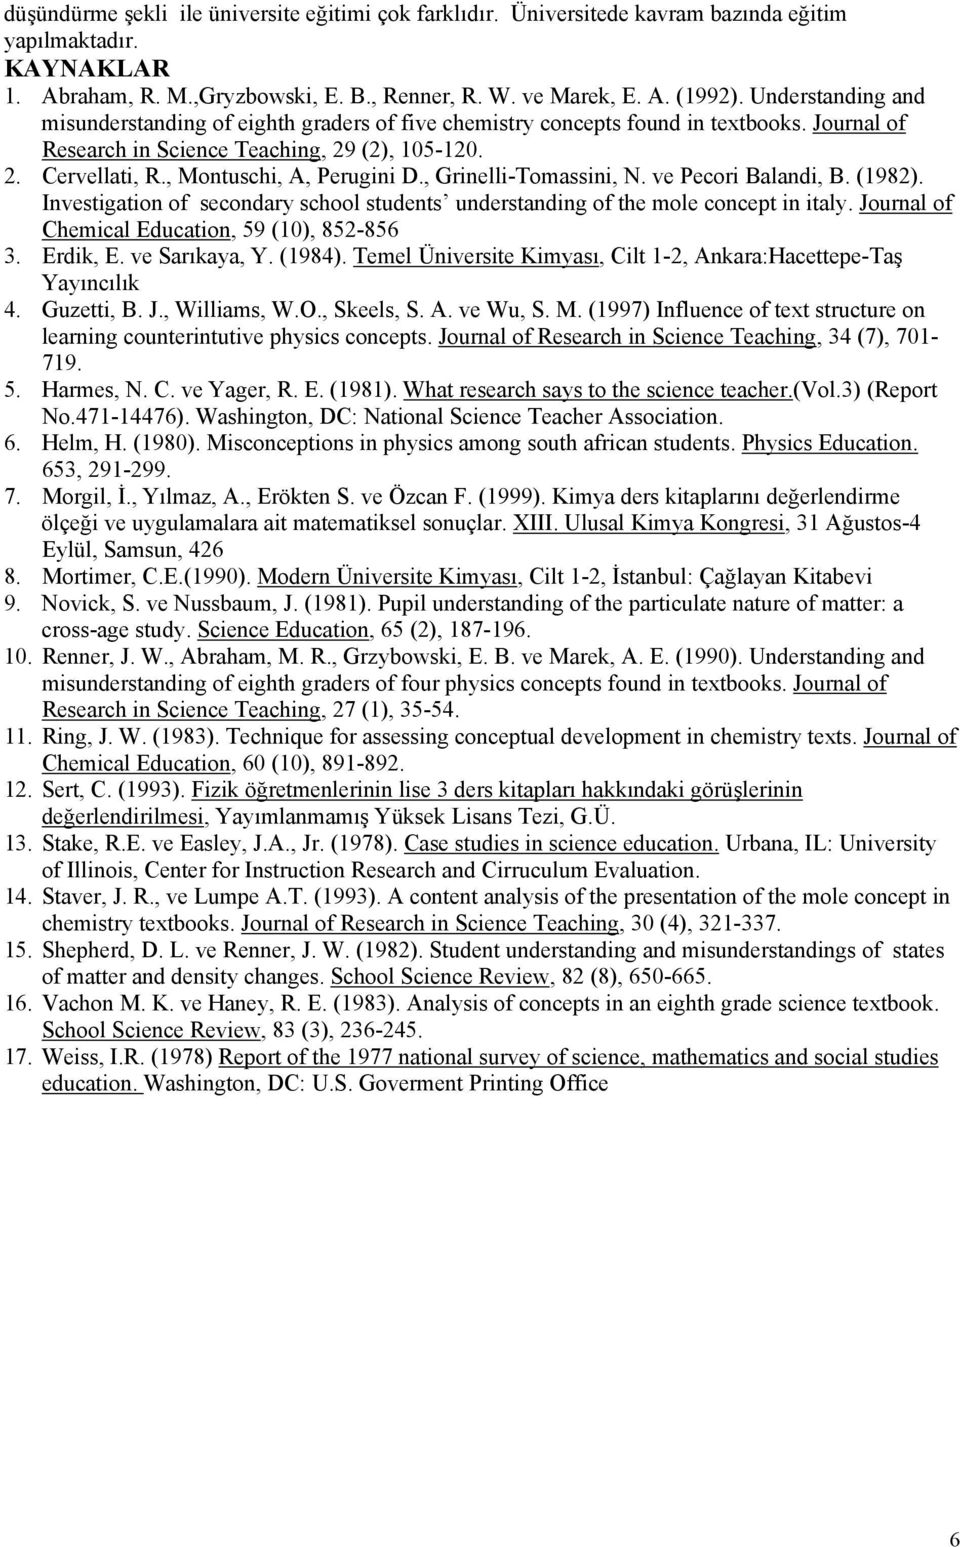 , Montuschi, A, Perugini D., Grinelli-Tomassini, N. ve Pecori Balandi, B. (1982). Investigation of secondary school students understanding of the mole concept in italy.